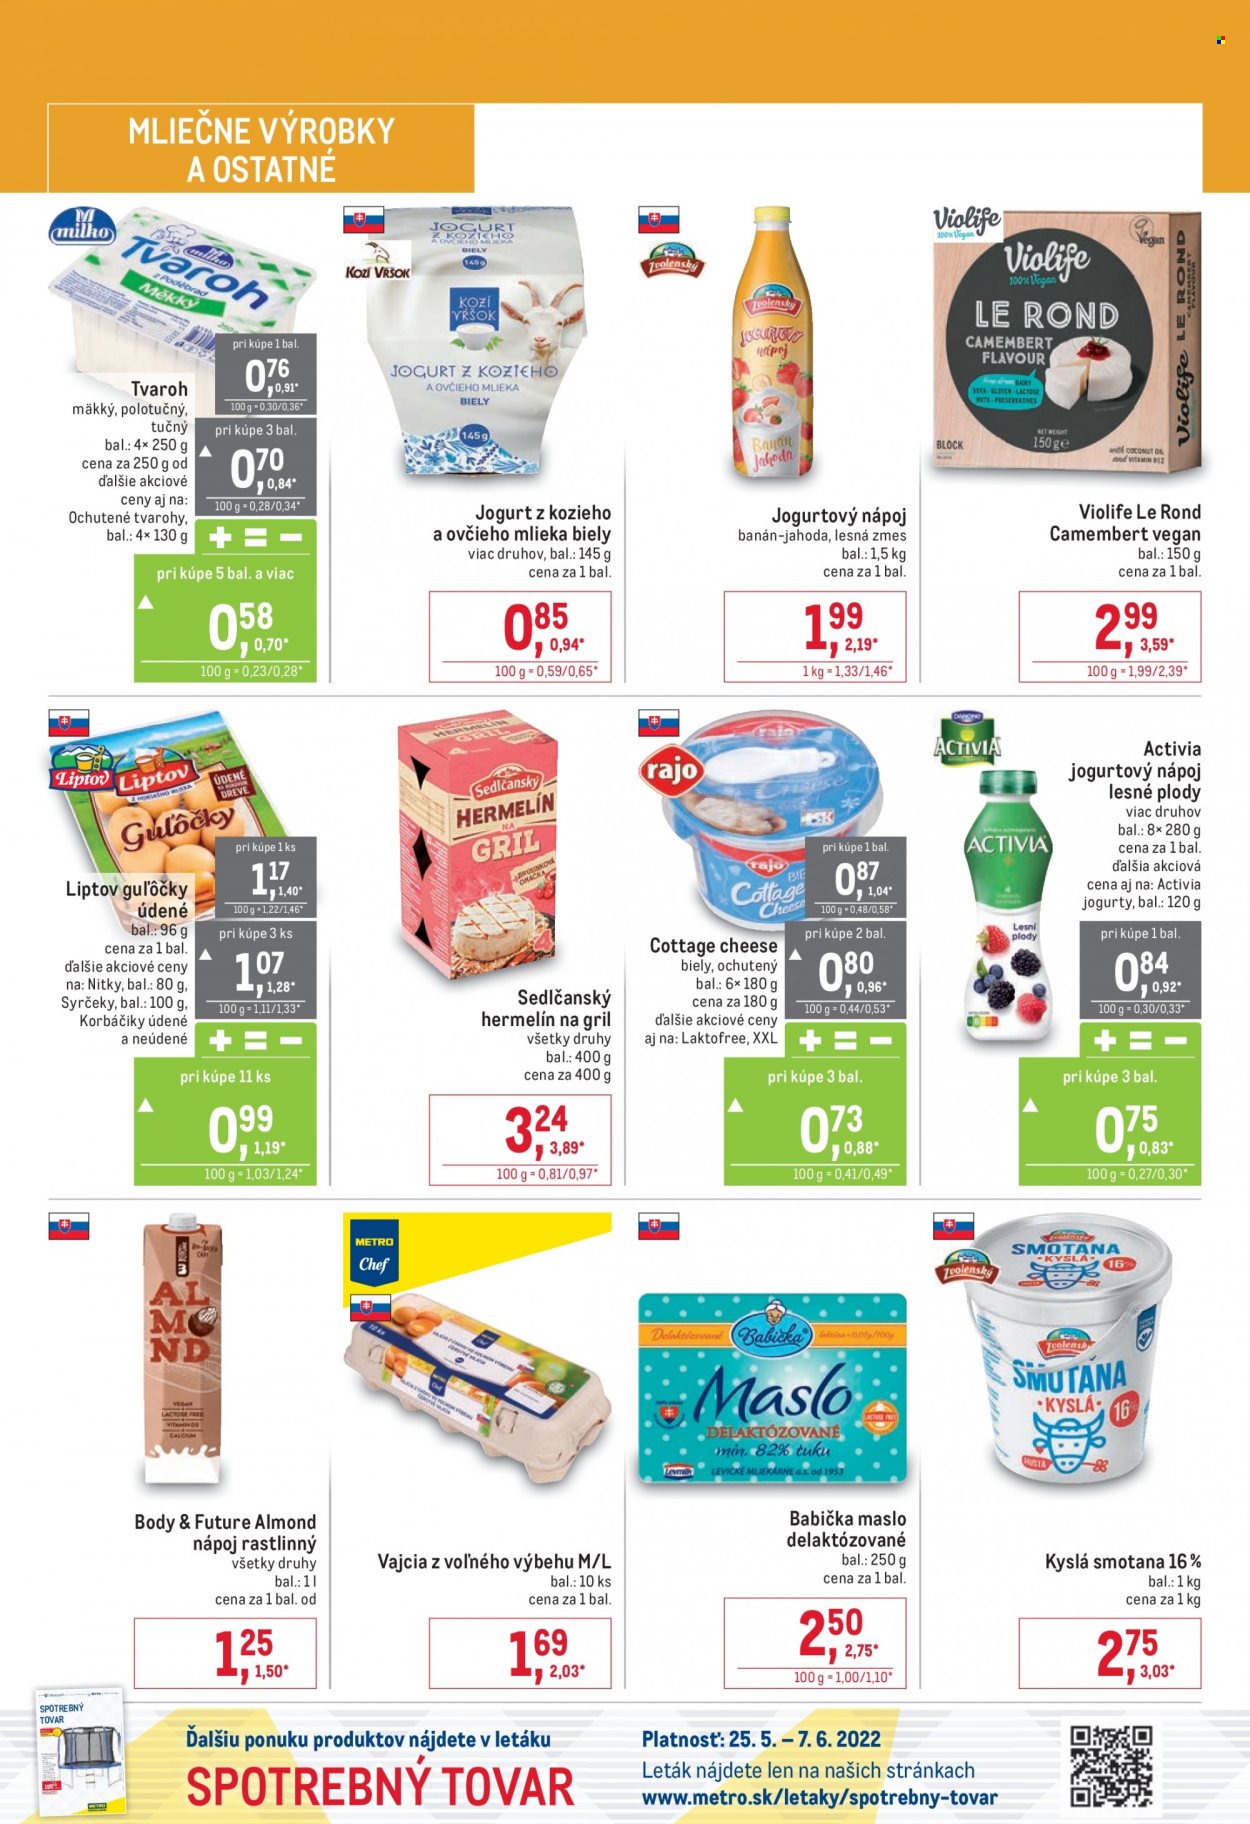 thumbnail - Leták Metro - 25.5.2022 - 7.6.2022 - Produkty v akcii - jogurt, kozí jogurt, ovčí jogurt, jogurtový nápoj, camembert, syr, Violife, grilovacie syr, hermelín, vajcia, tvaroh, tvaroh mäkký, korbáče, Liptov, údený syr, cottage cheese, Activia, Body&Future, nápoj, Babička, bezlaktózové maslo, maslo, smotana, smotana kyslá. Strana 6.